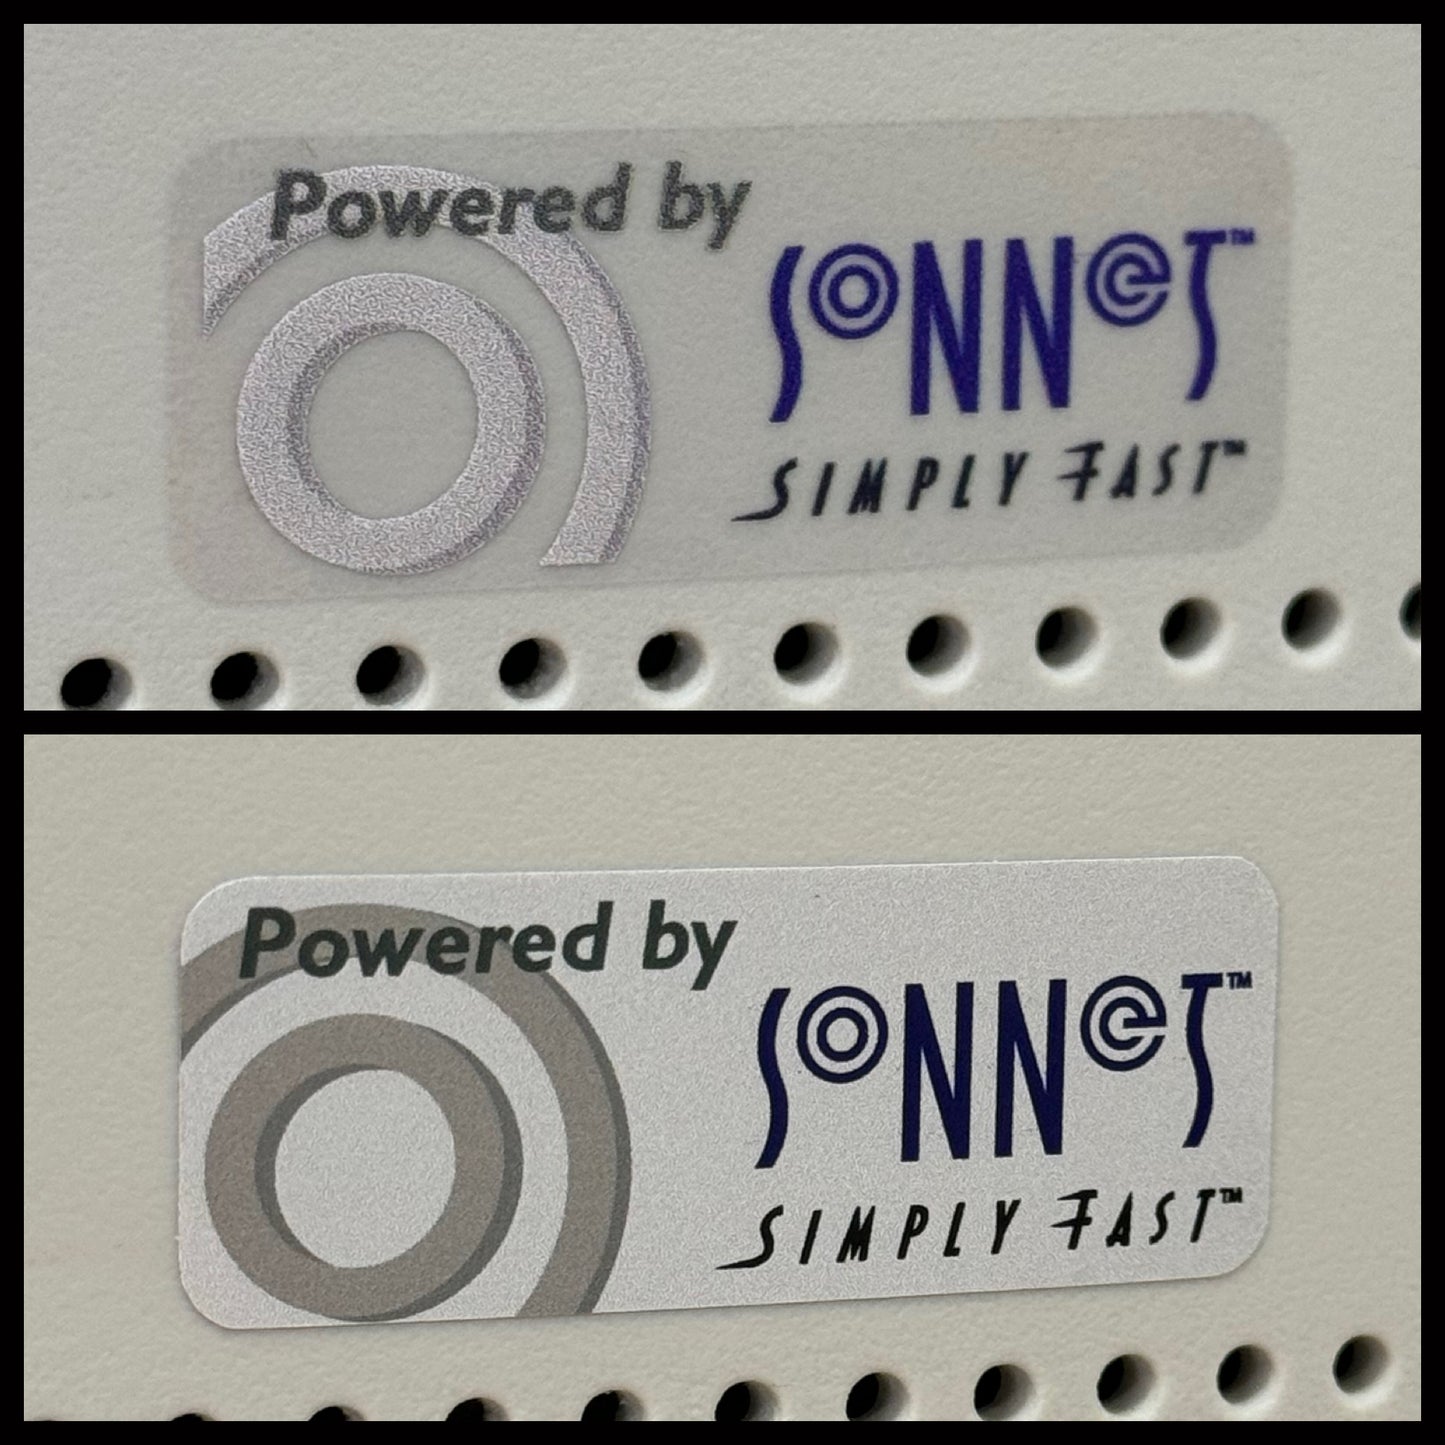 Apple Mac Power PC Macintosh “Powered by Sonnet” Case Badge Sticker